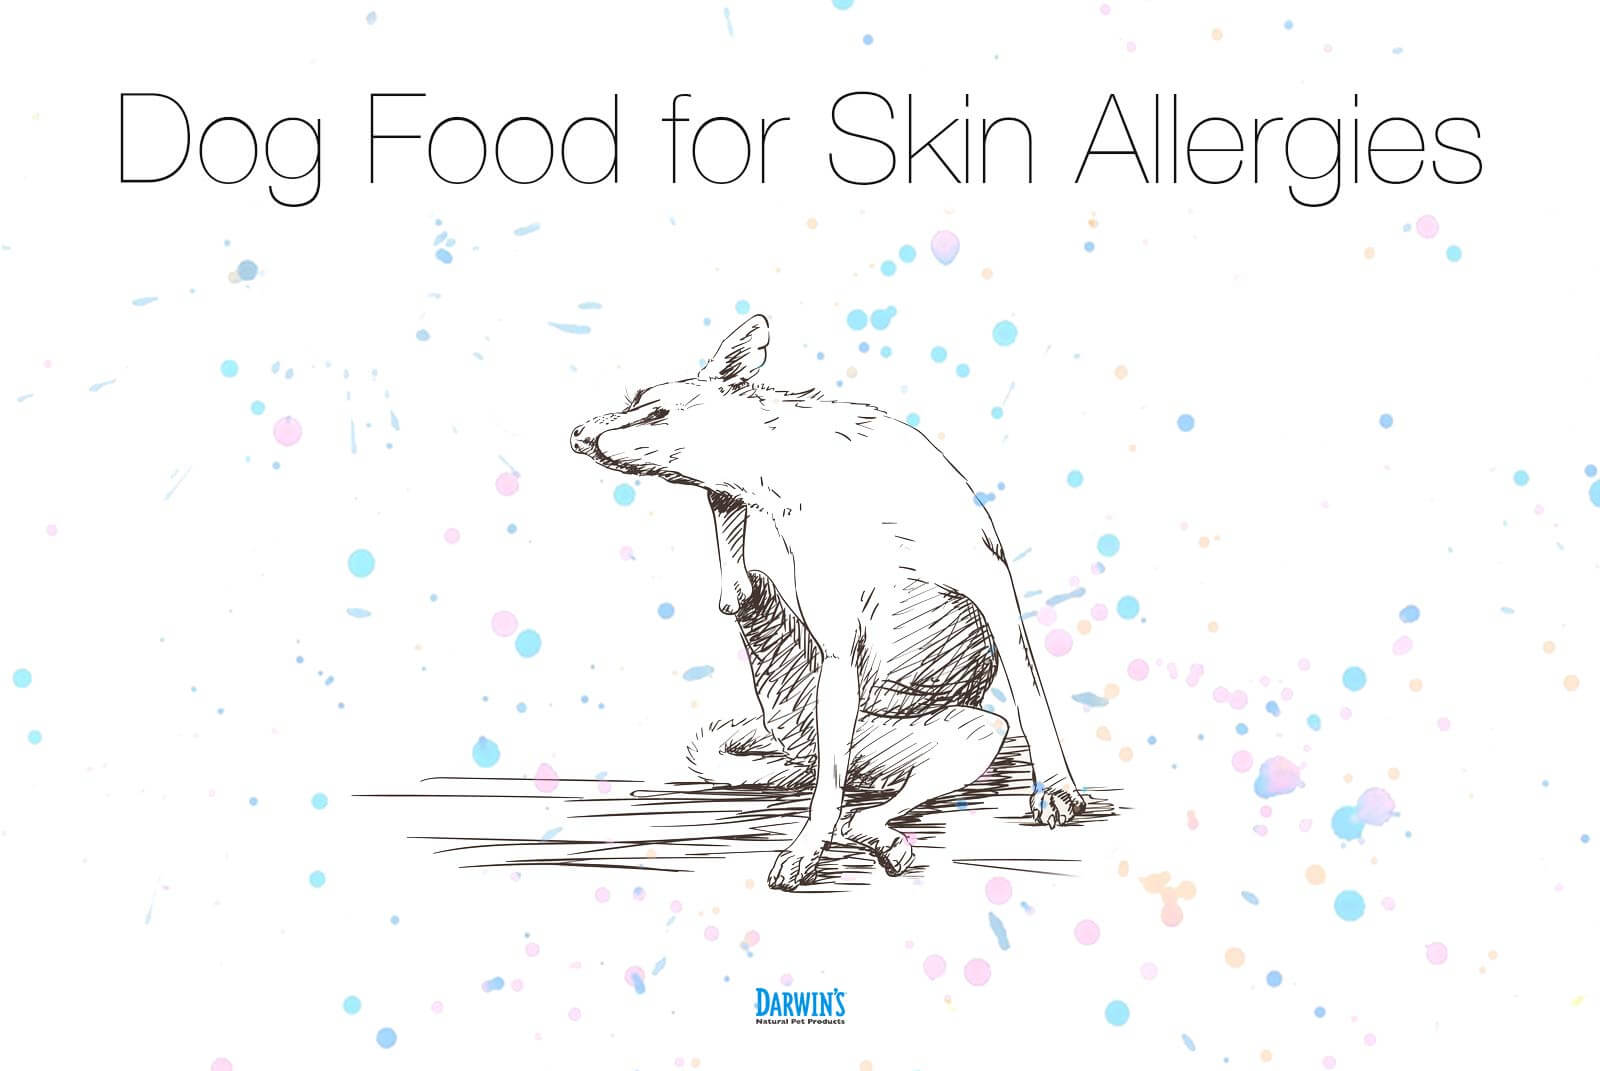 Dog Food for Skin Allergies?